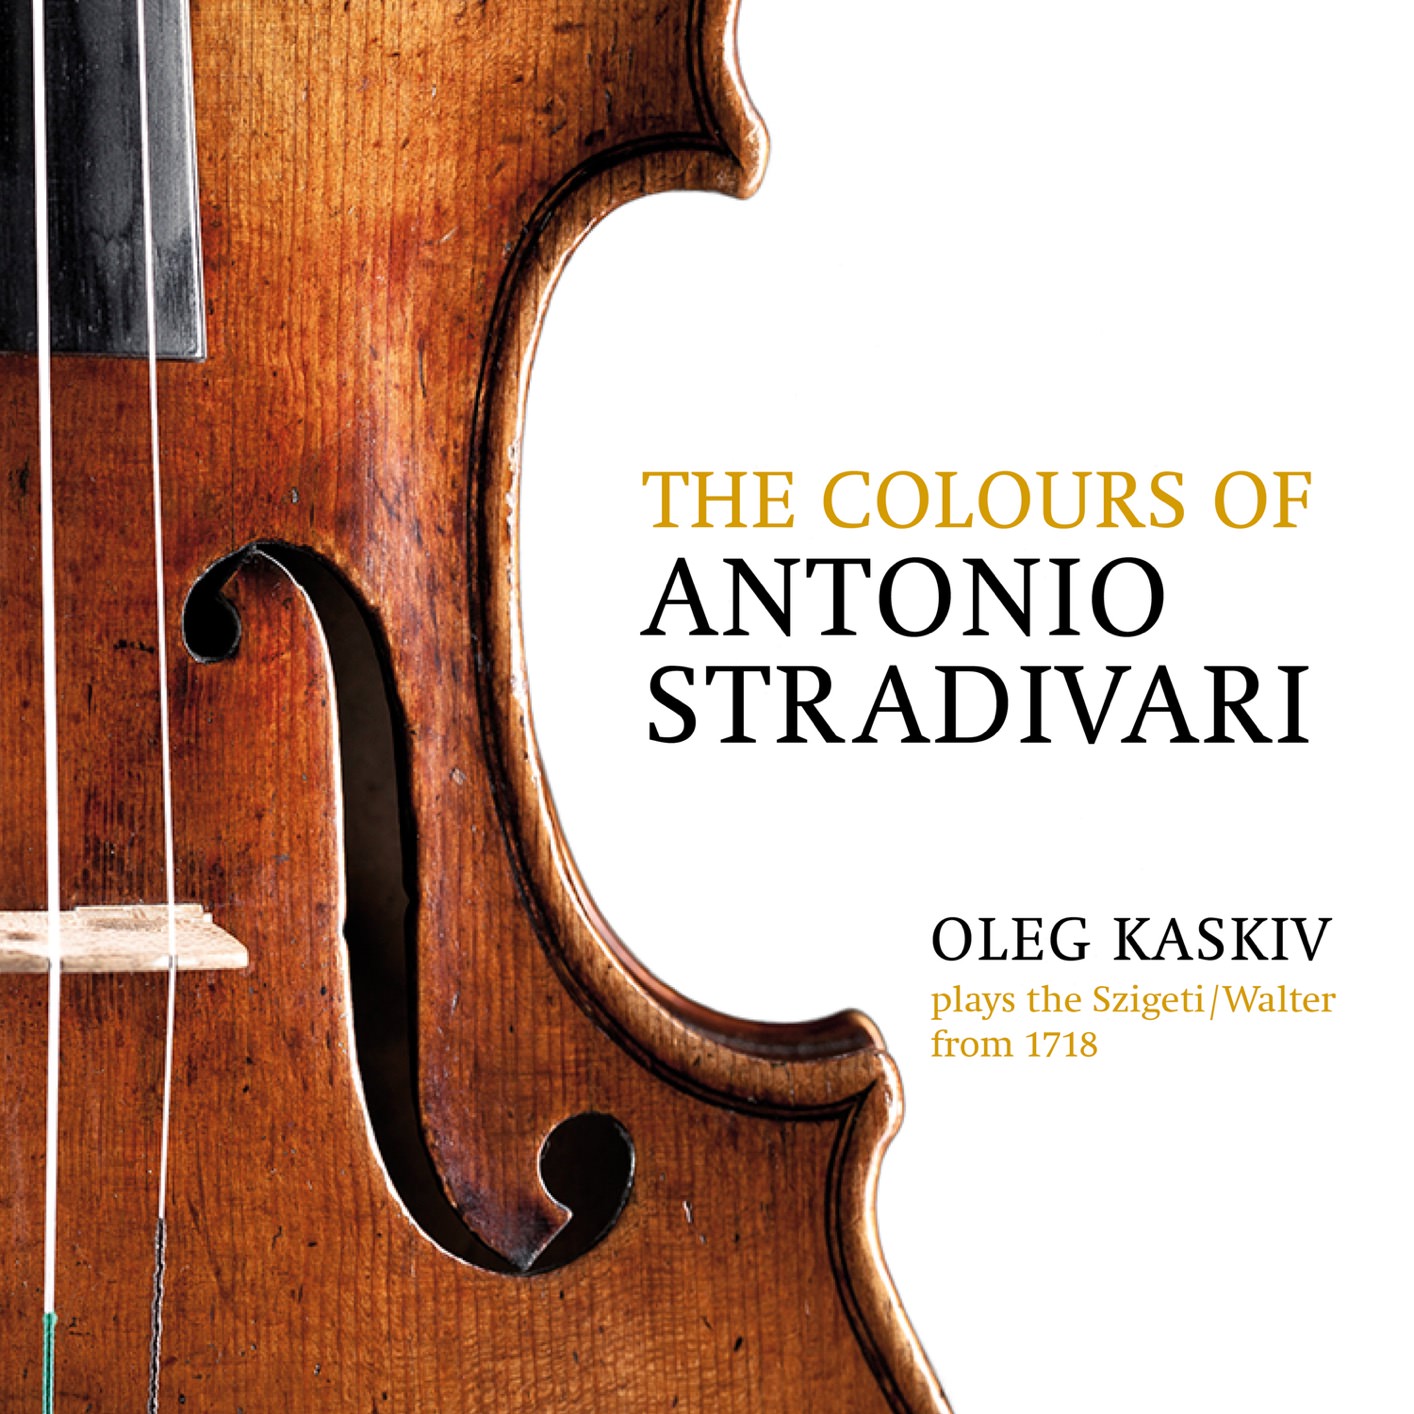 Oleg Kaskiv – The Colours of Antonio Stradivari, Oleg Kaskiv Plays the Szigeti/Walter from 1718 (2012/2018) [FLAC 24bit/96kHz]